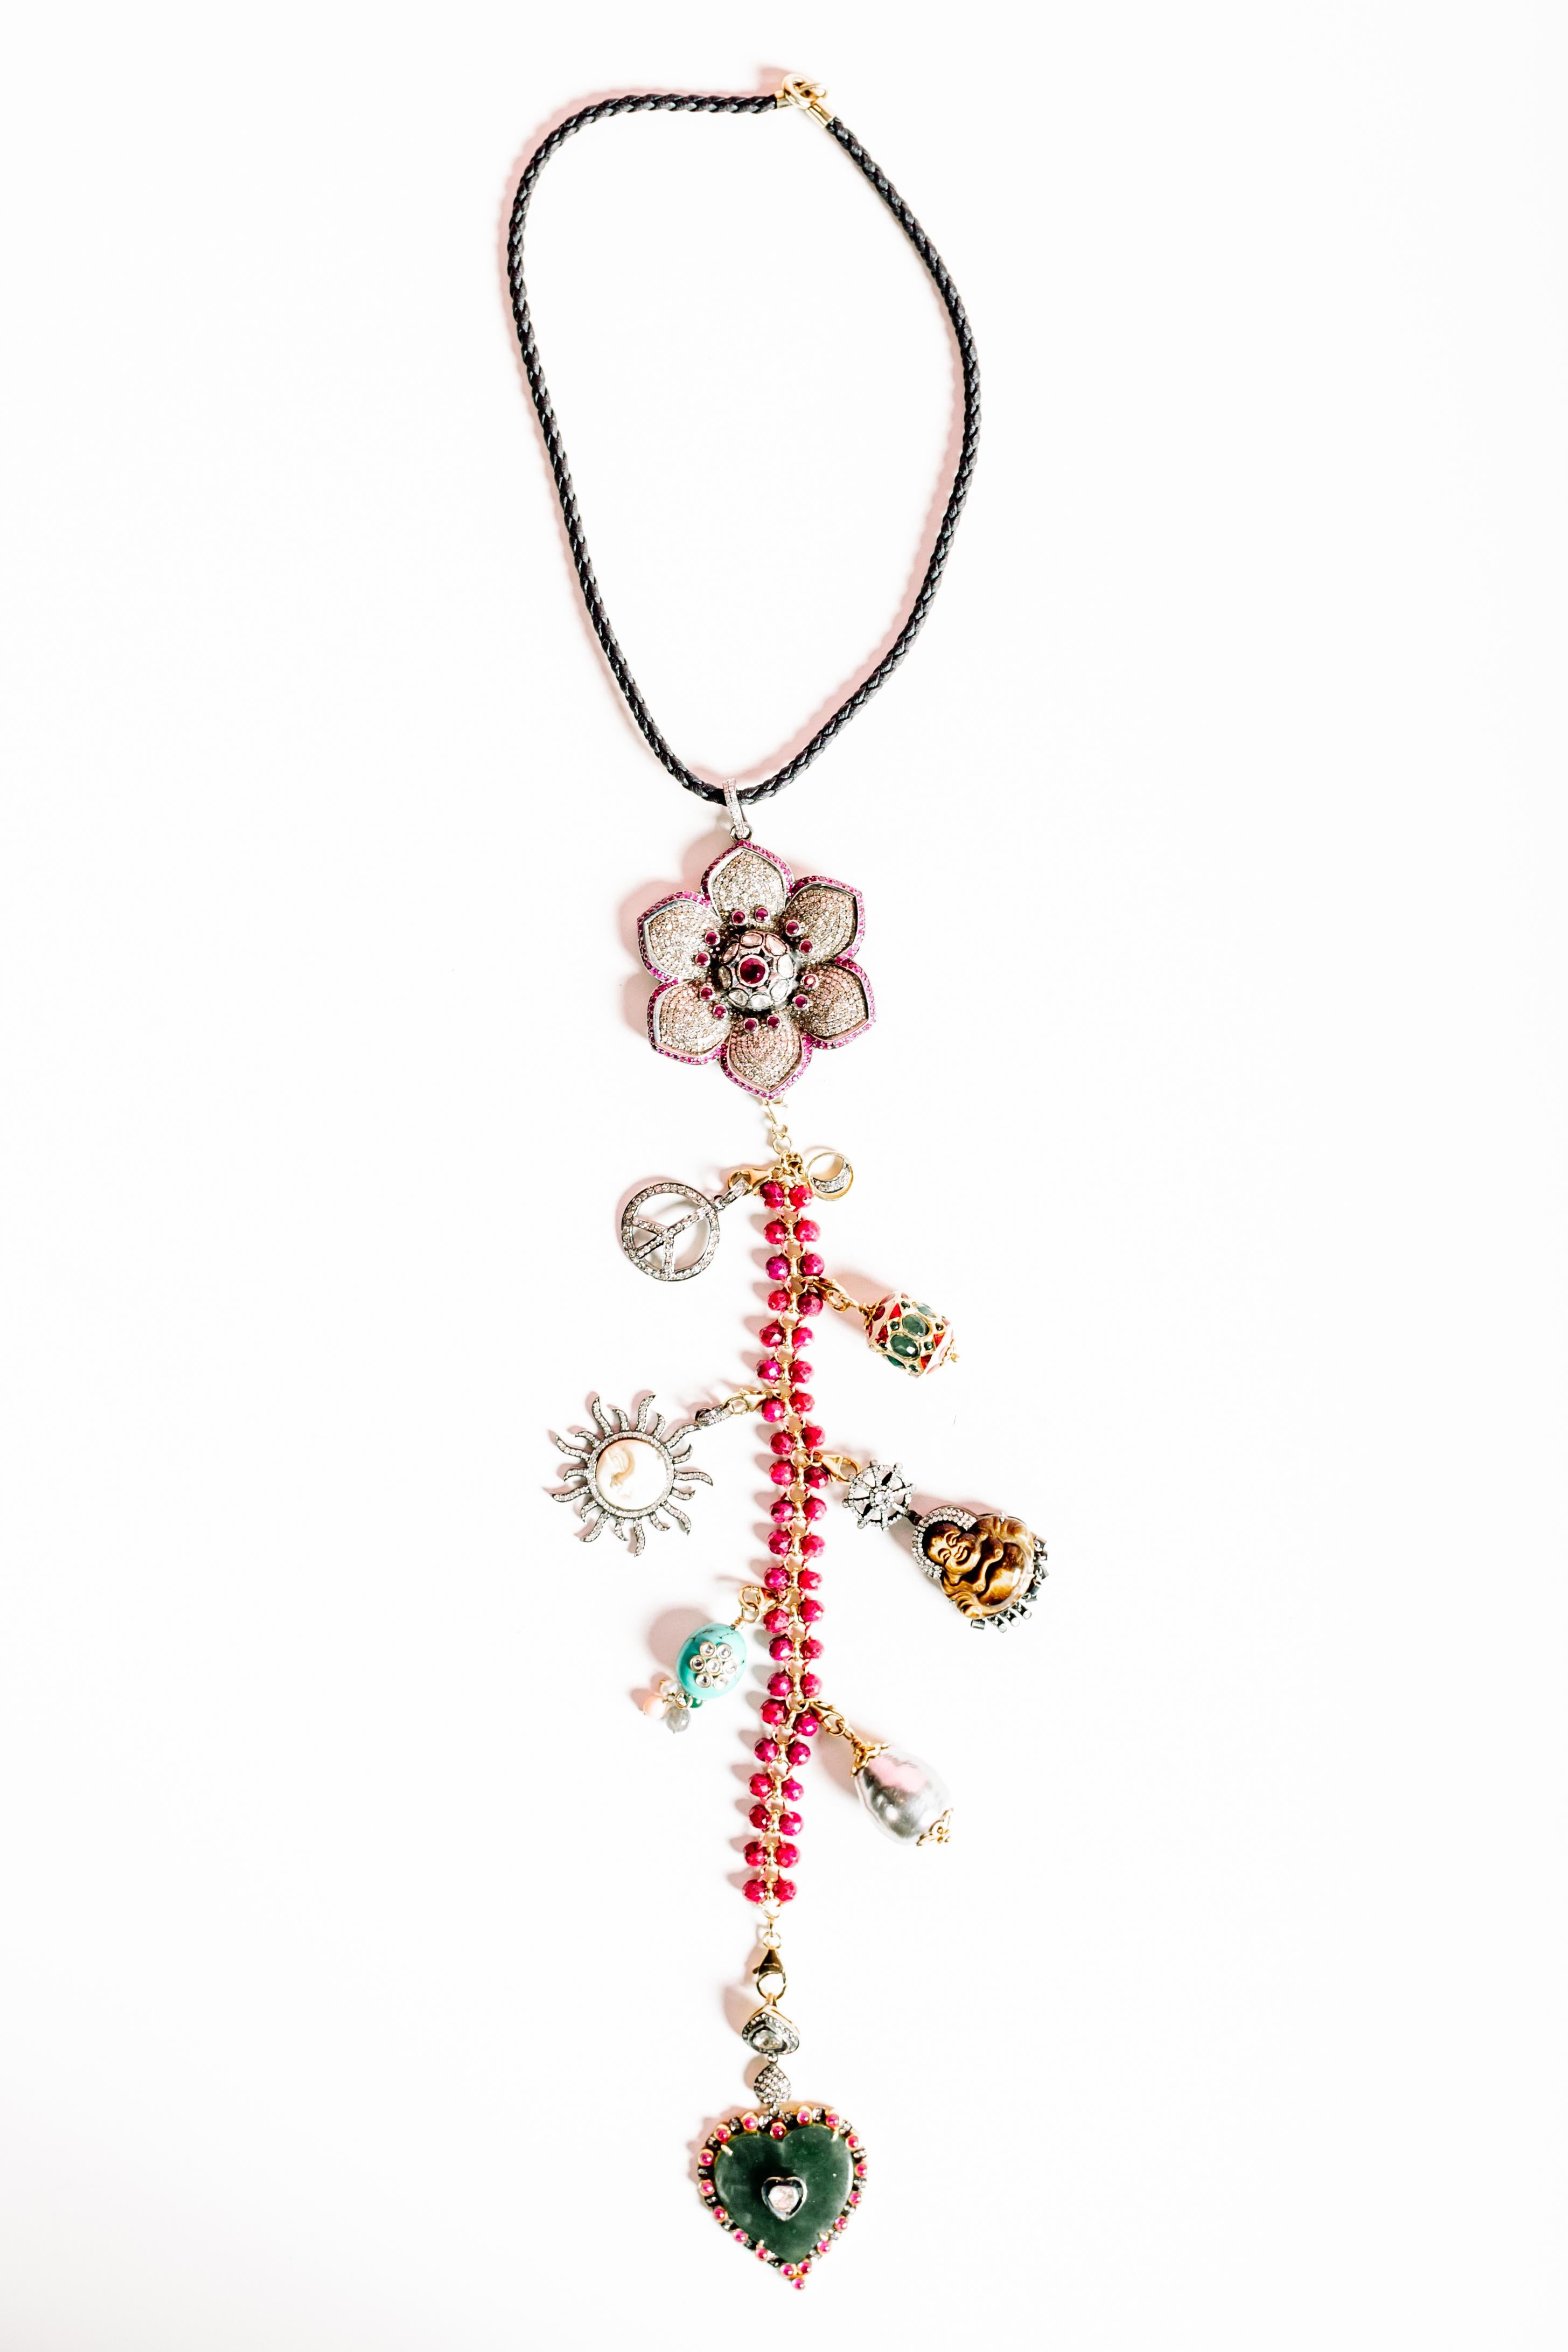 Contemporary Clarissa Bronfman Signature 'Reine Du Soleil' Symbol Tree Necklace